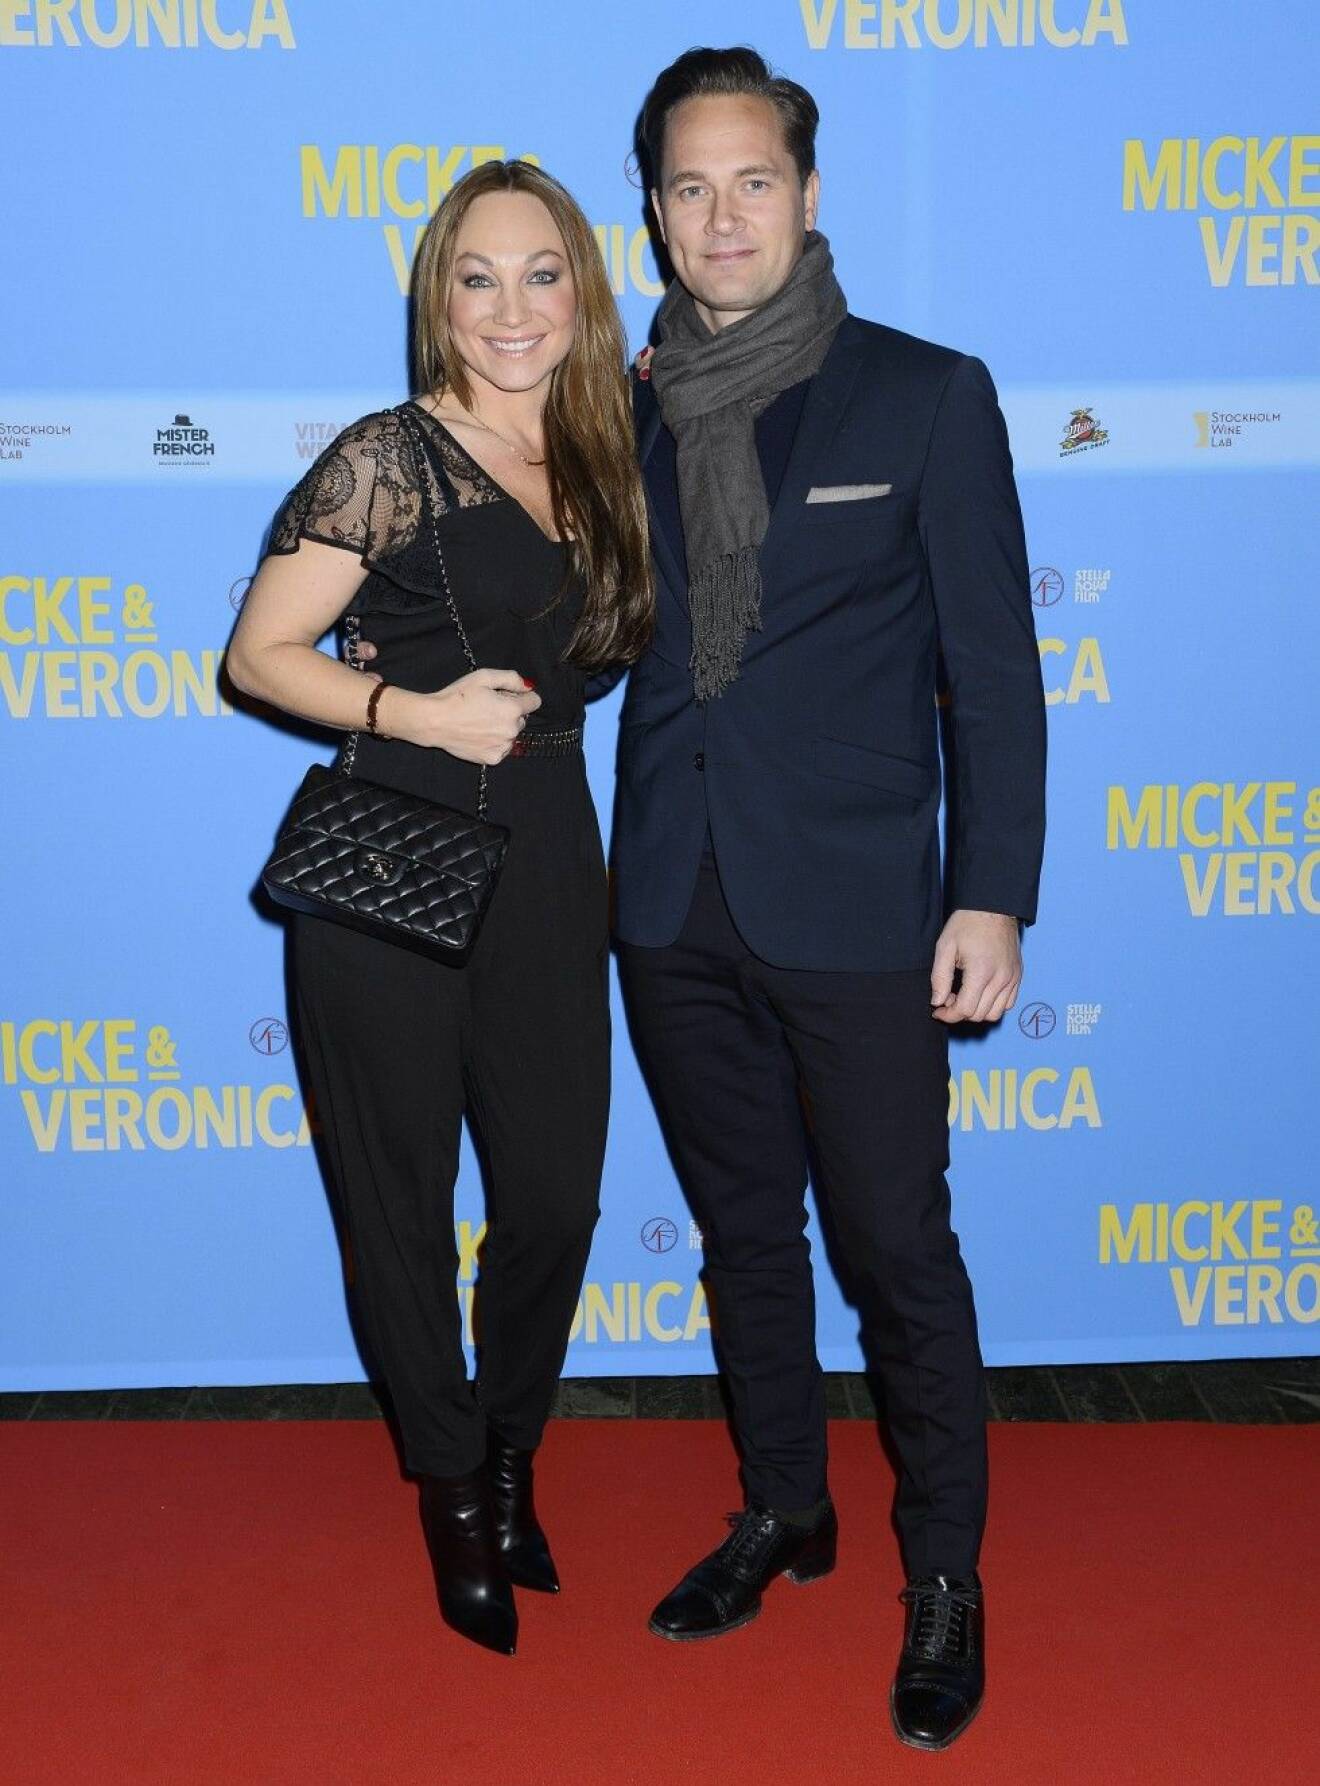 Premiär "Micke & Veronica", Rigoletto, Stockholm, 2014-12-14